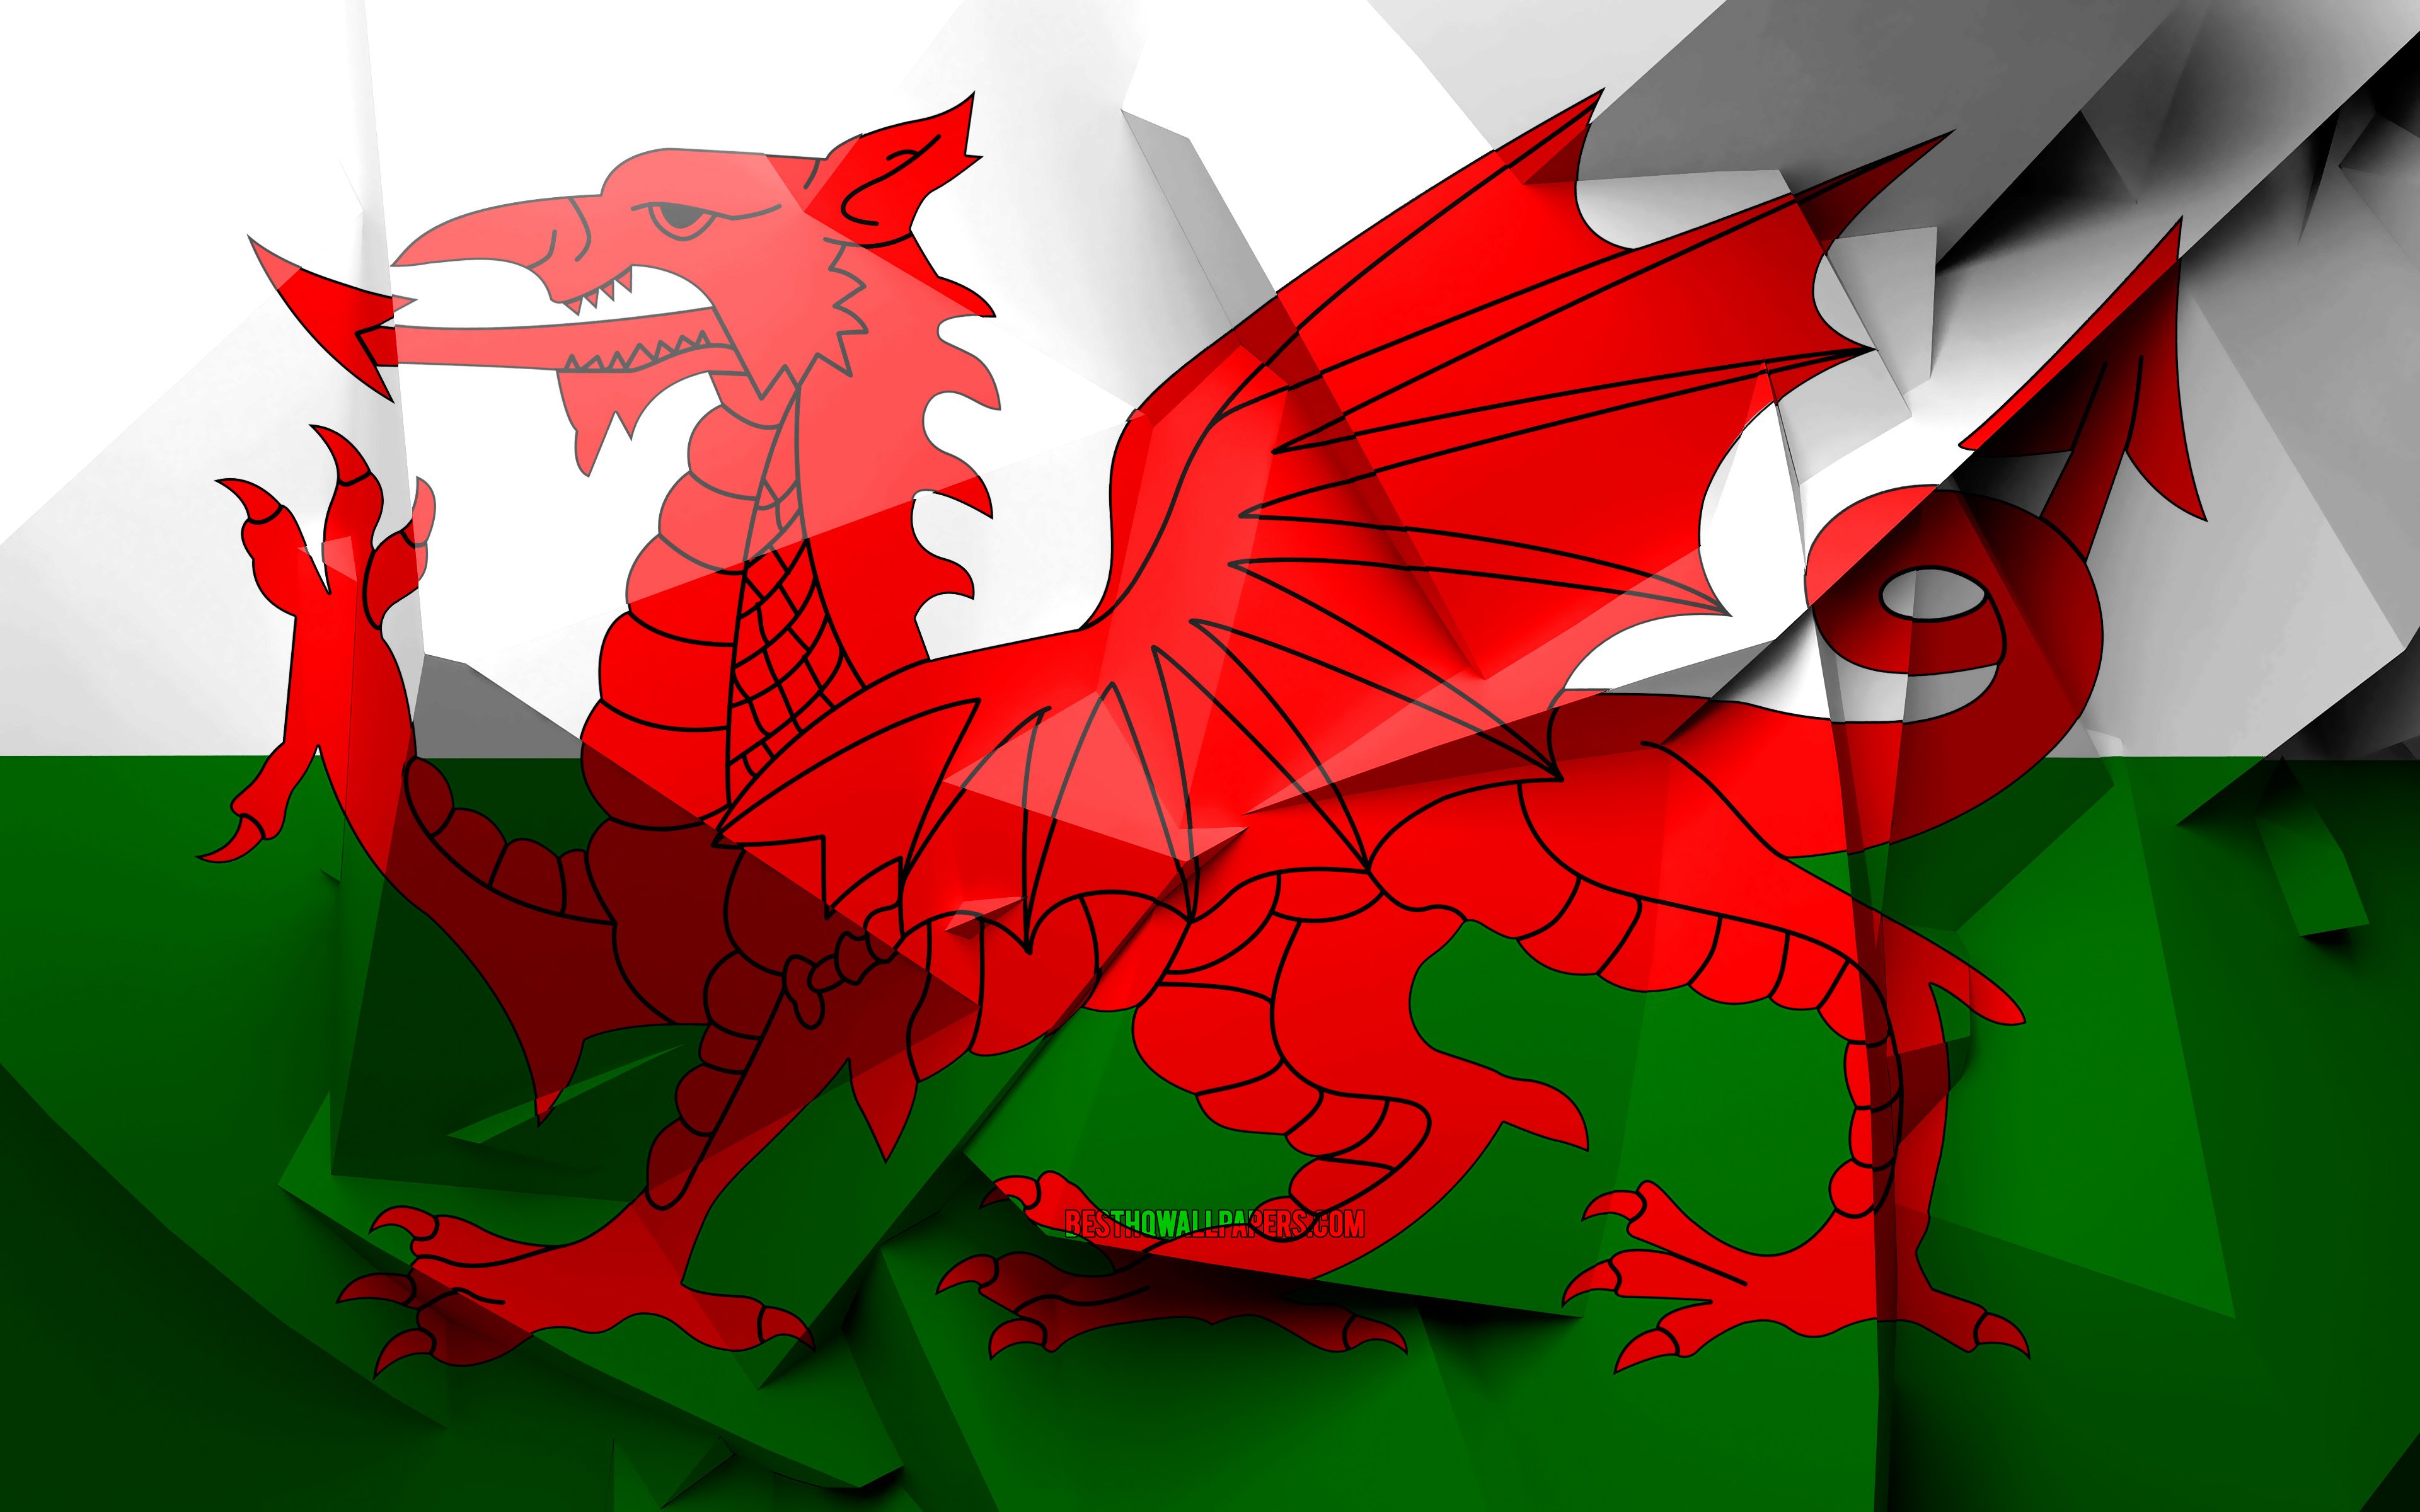 Welsh. Флаг Уэльса. Флаг королевства Уэльса. Дракон на флаге Уэльса. Красный дракон на флаге Уэльса.